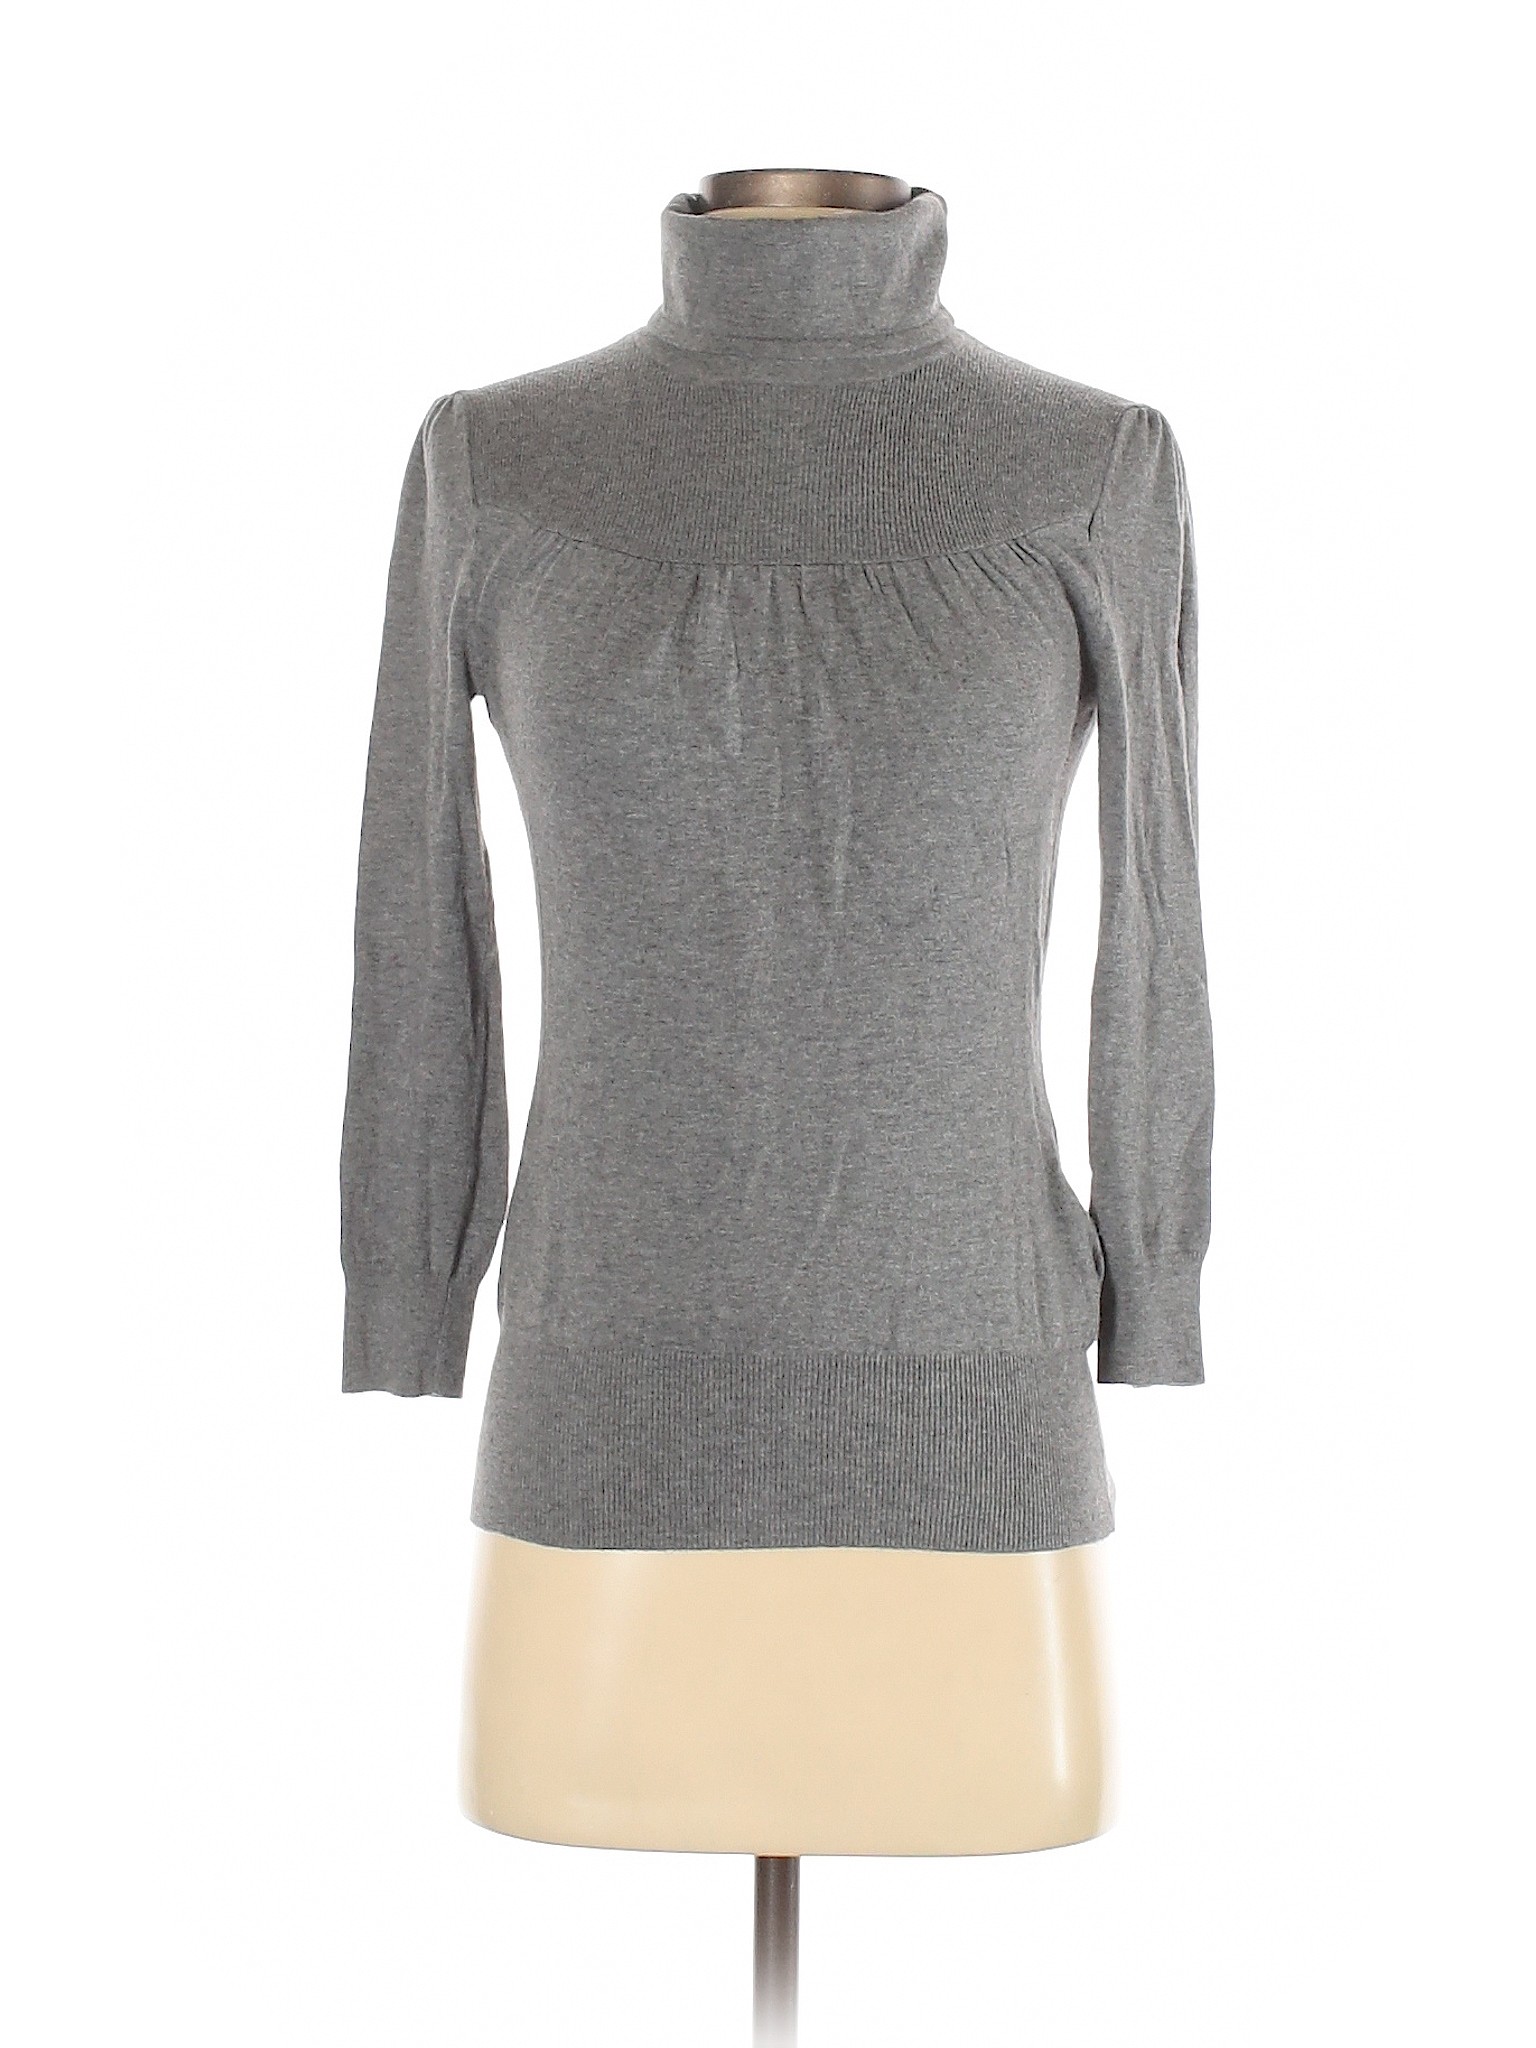 Banana Republic Women Gray Turtleneck Sweater XS | eBay